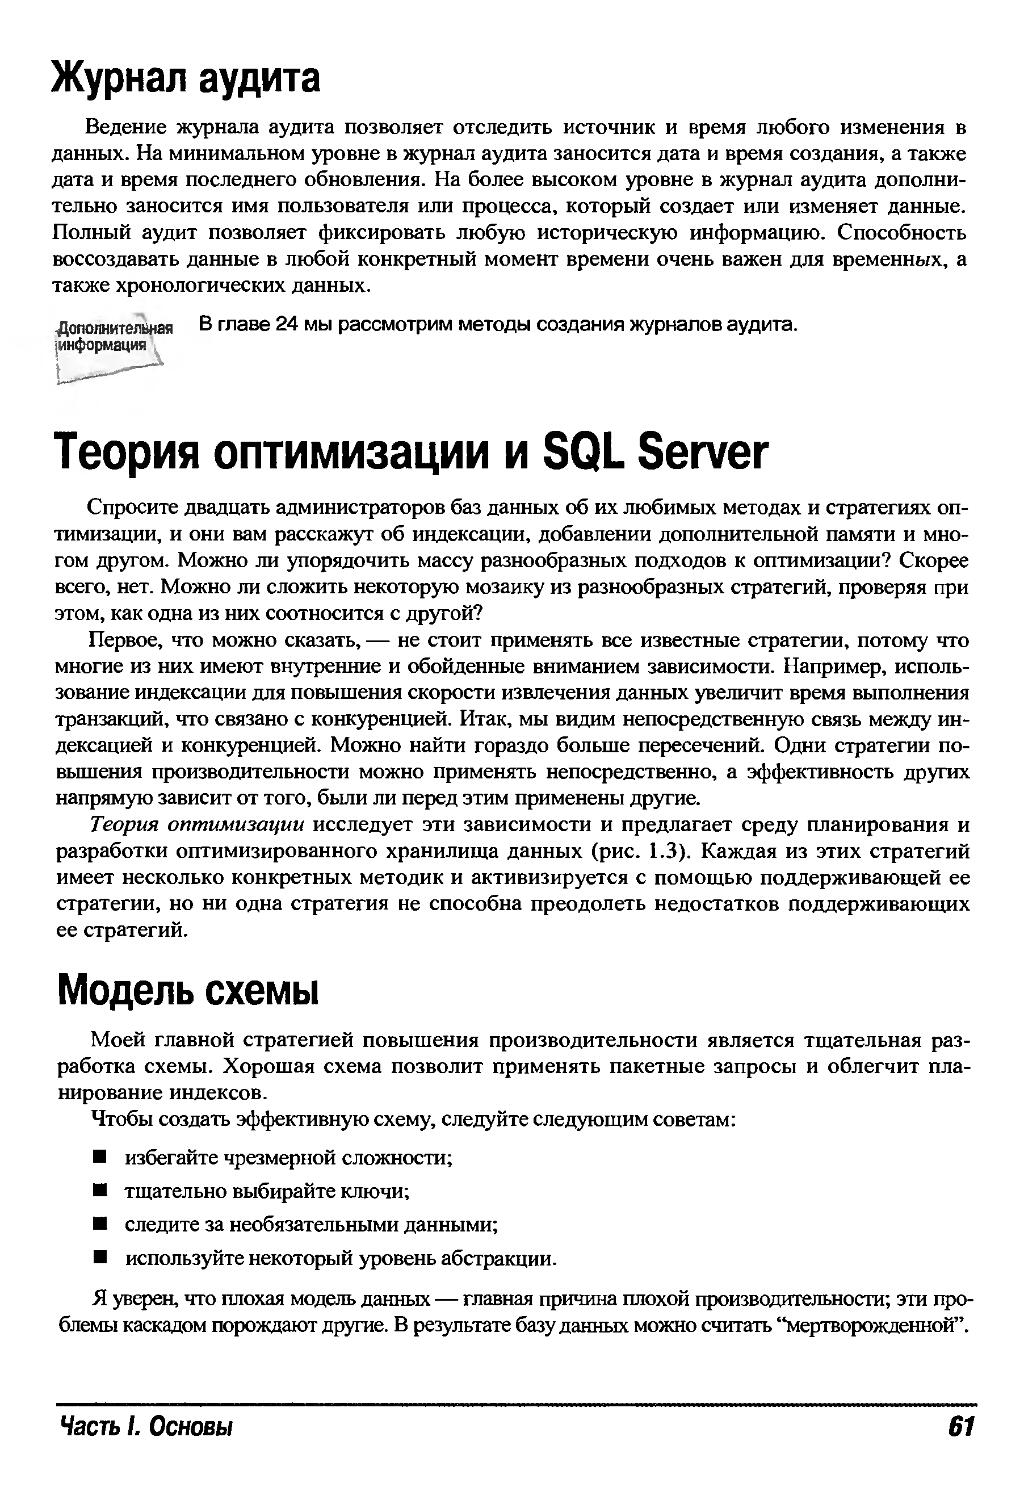 Теория оптимизации и SQL Server